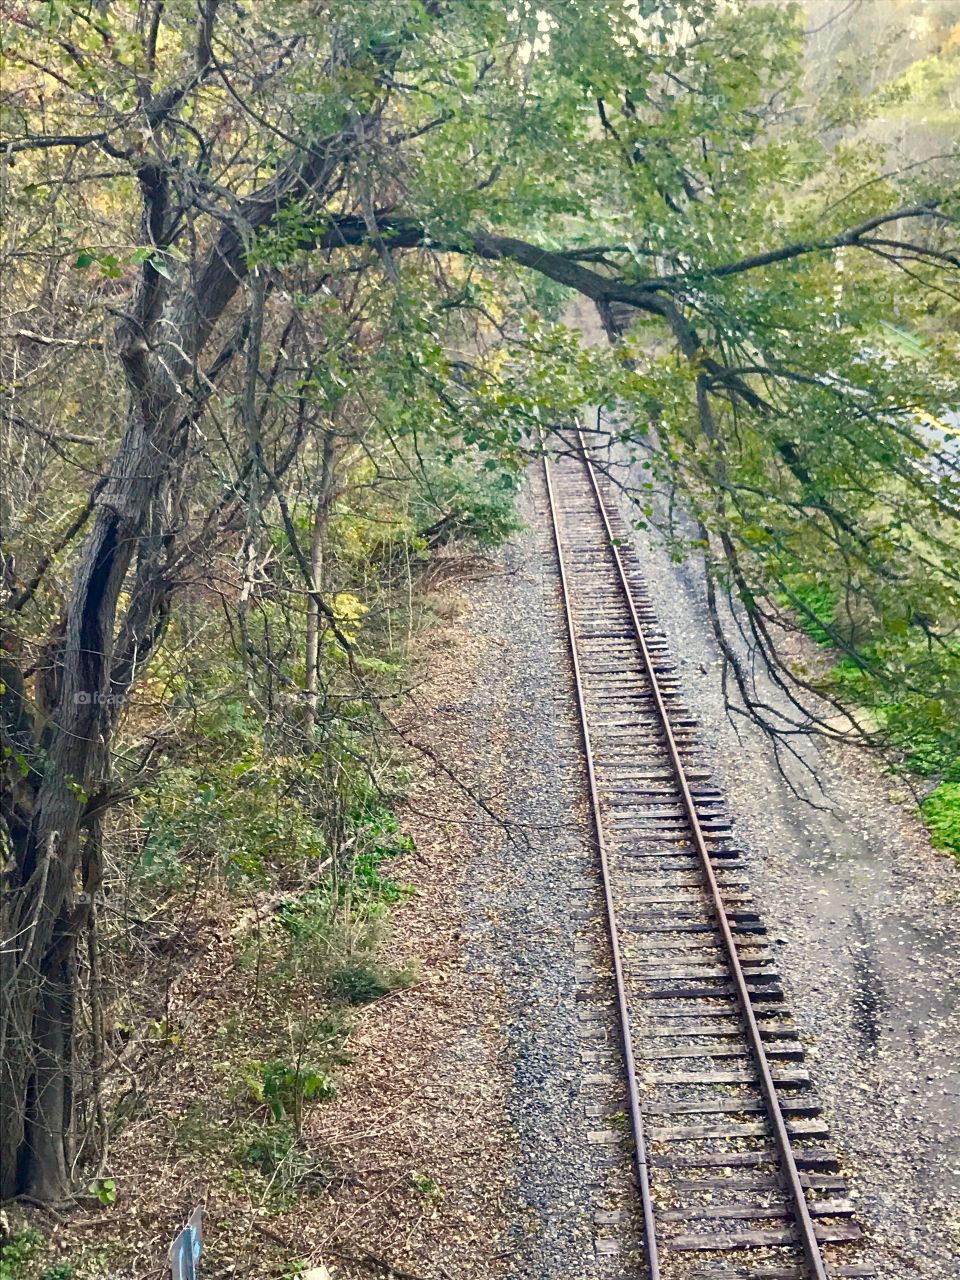 Railroad Tracks through the Woods